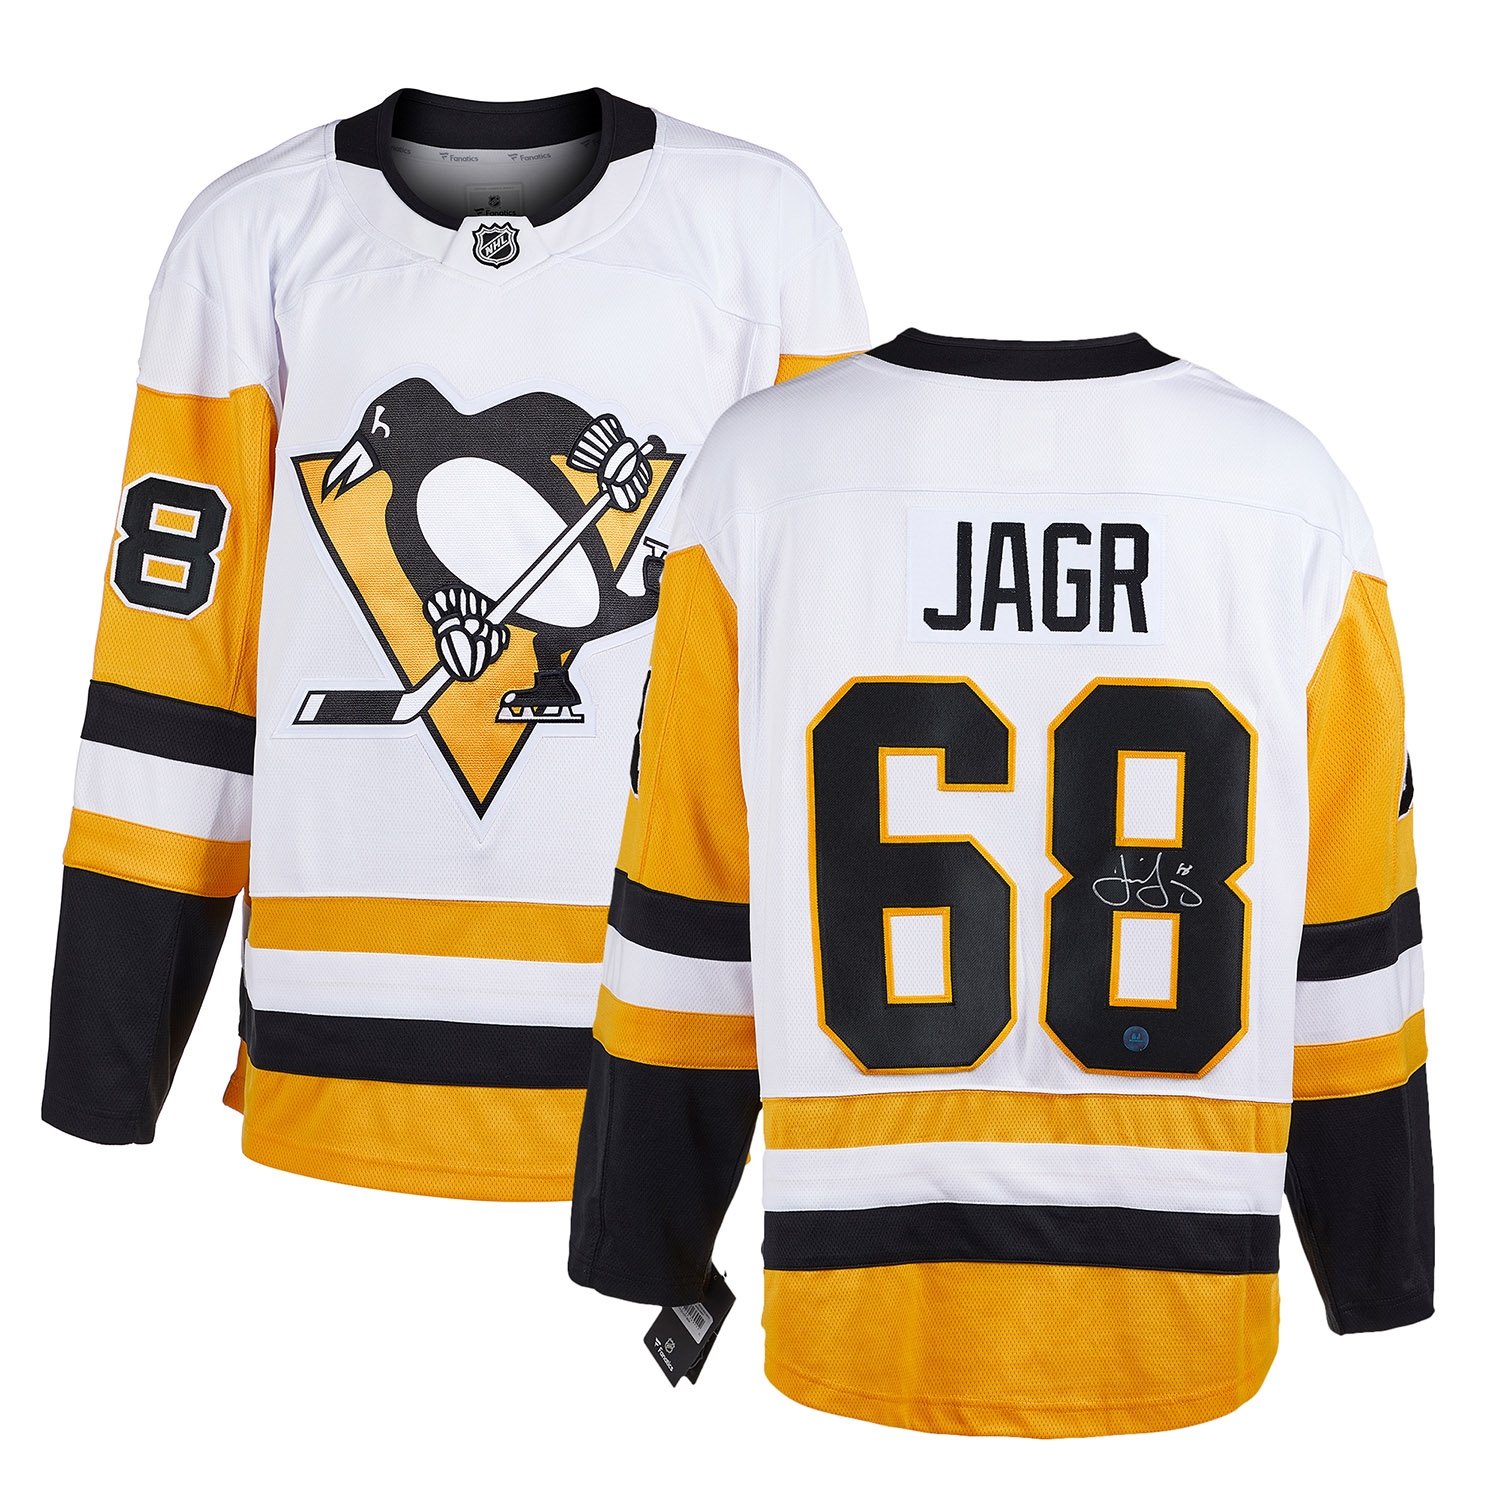 Jaromir Jagr Pittsburgh Penguins Signed White Fanatics Jersey